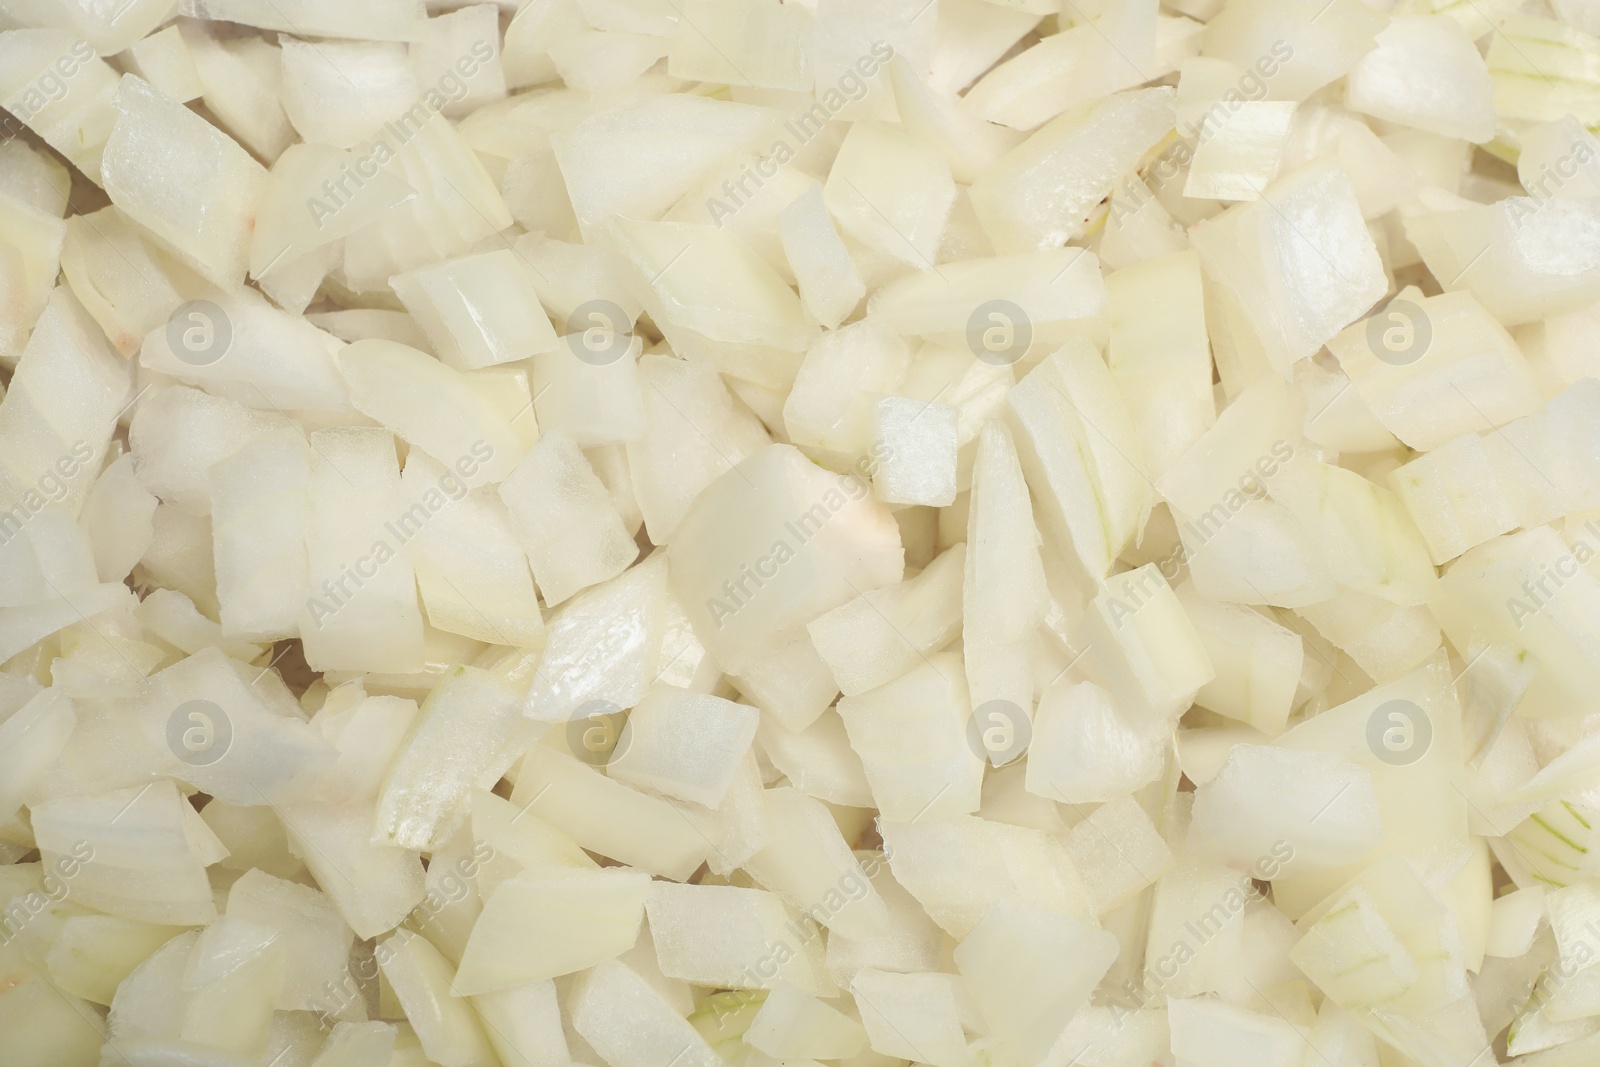 Photo of Fresh cut onion as background, closeup view